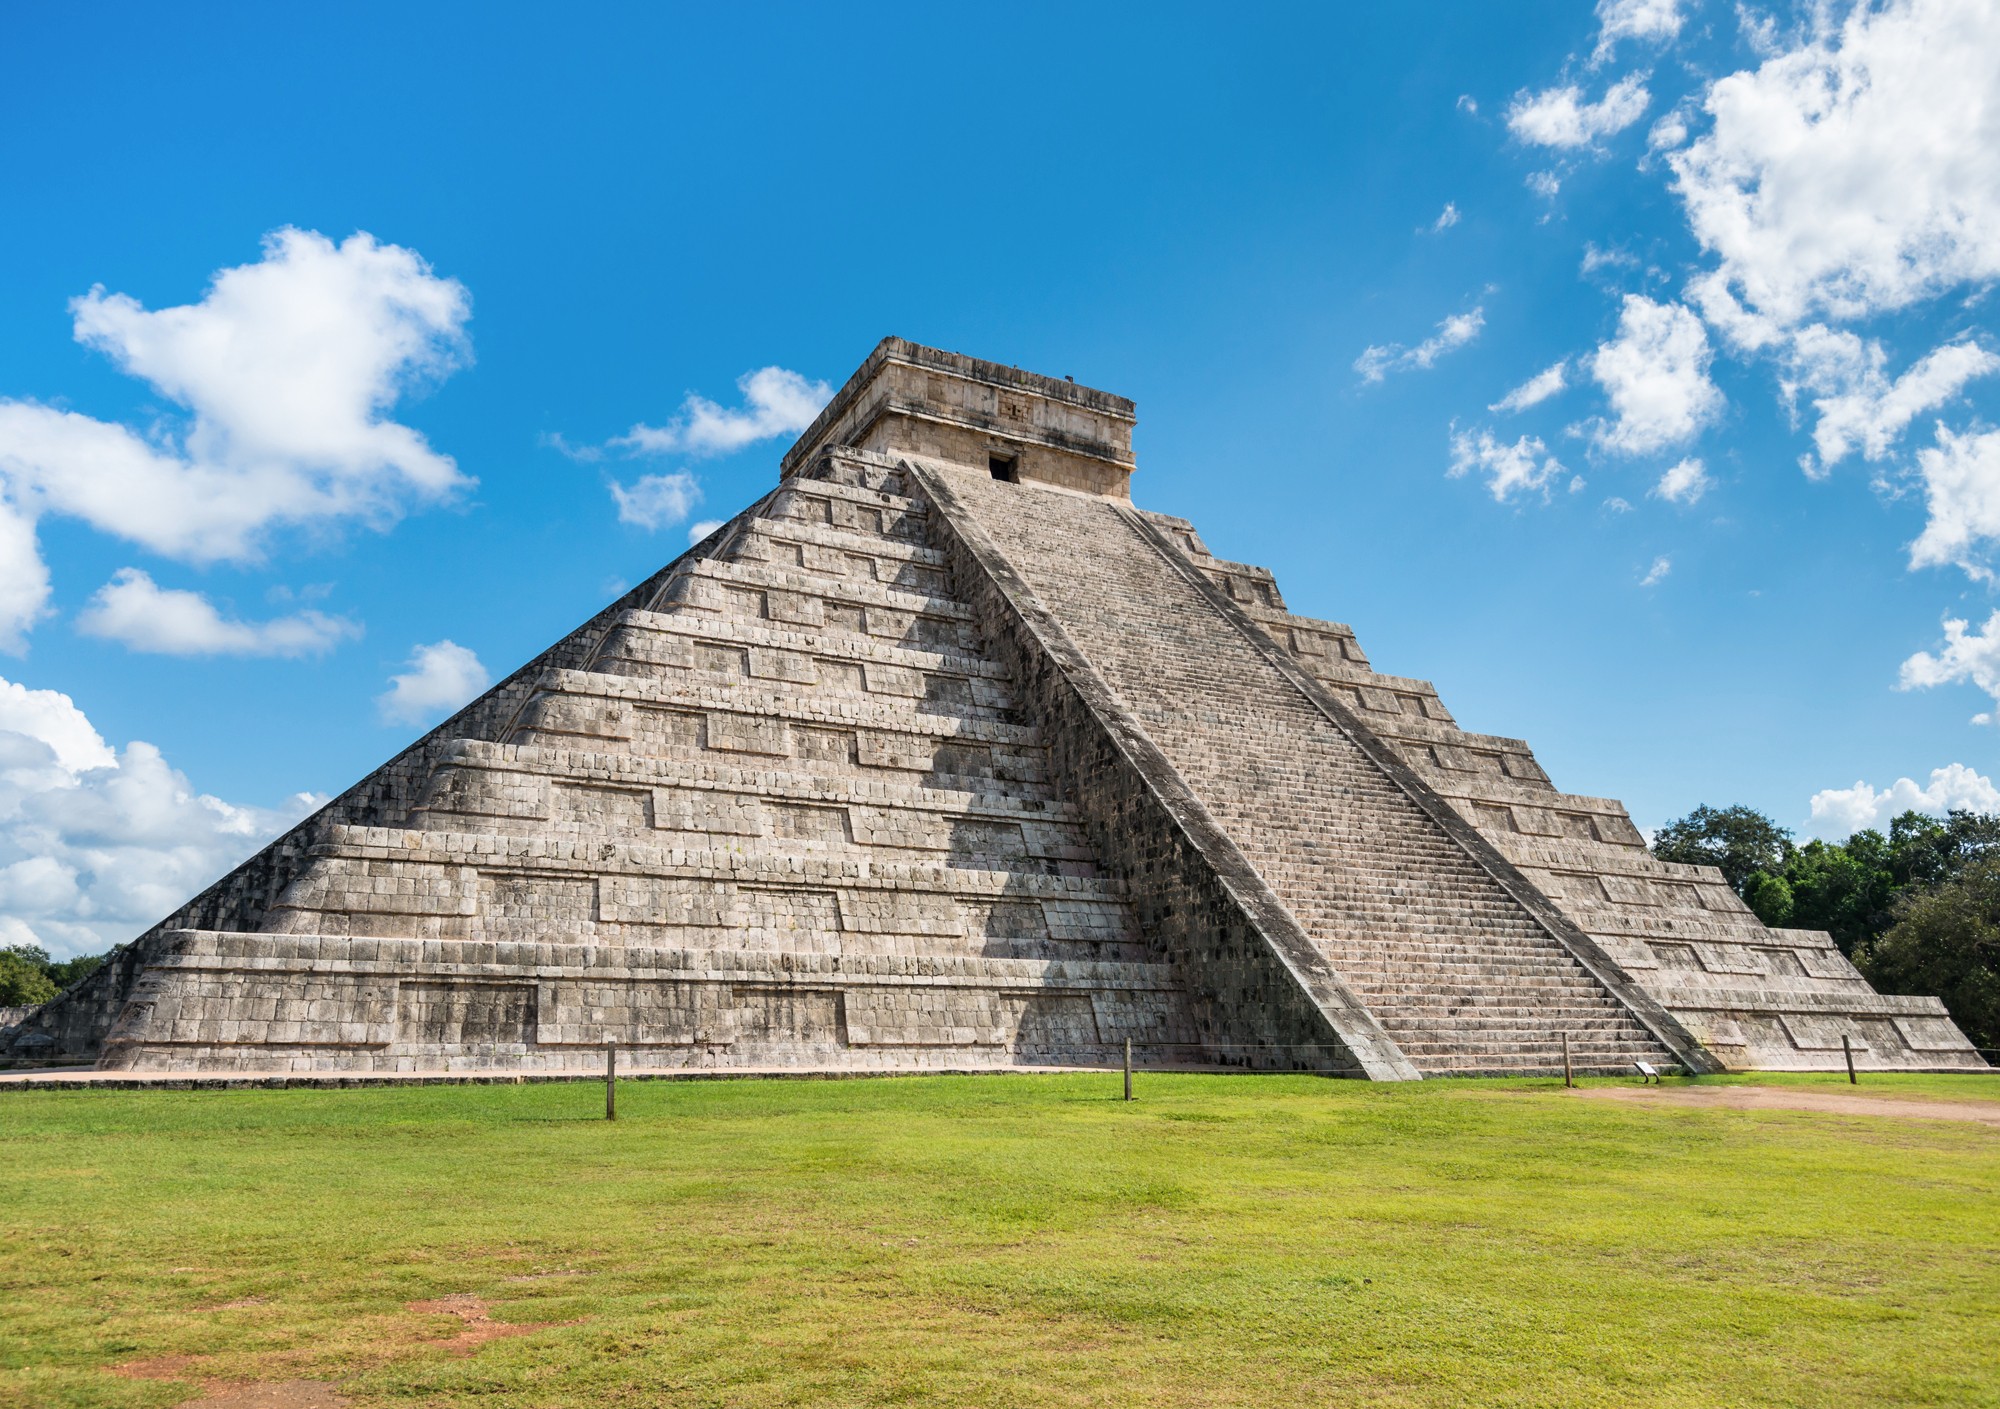 Чичен-Ица — самая известная пирамида майя.